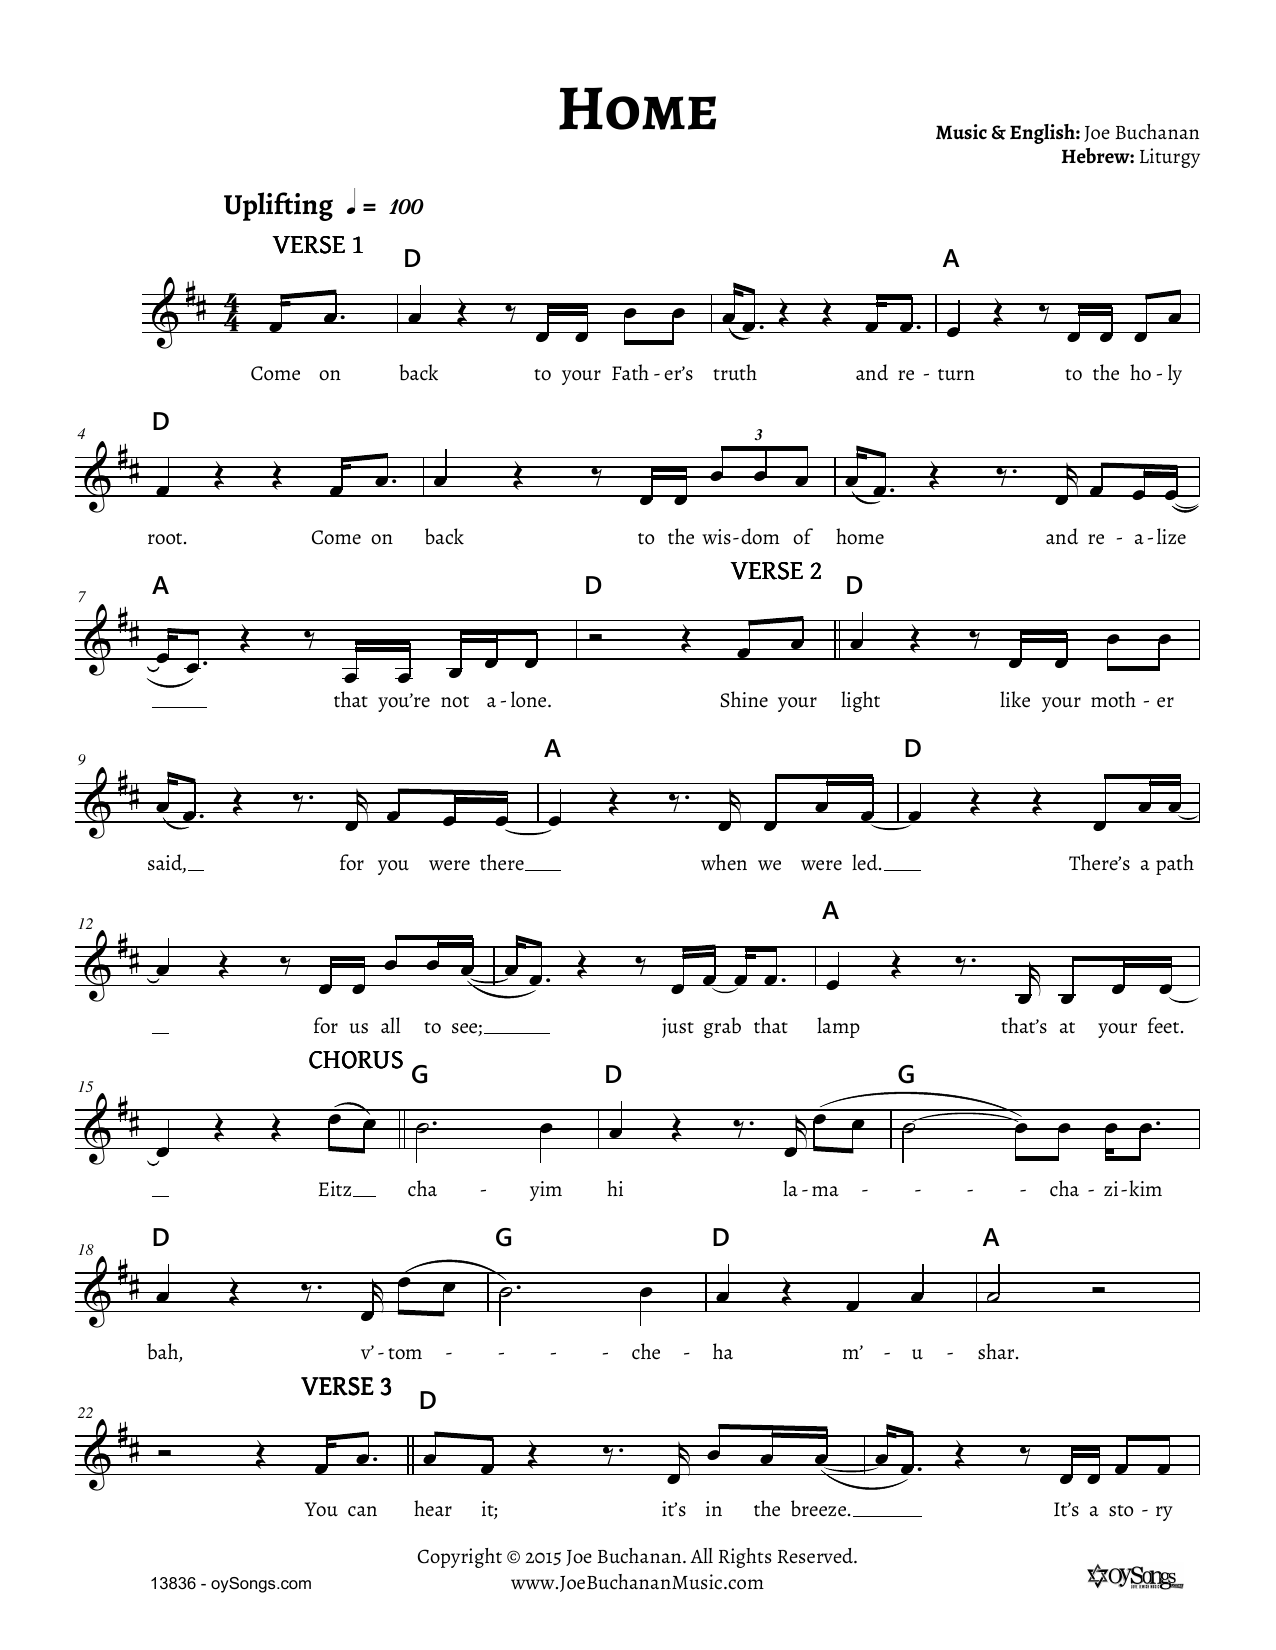 Joe Buchanan Home Sheet Music Notes & Chords for Melody Line, Lyrics & Chords - Download or Print PDF